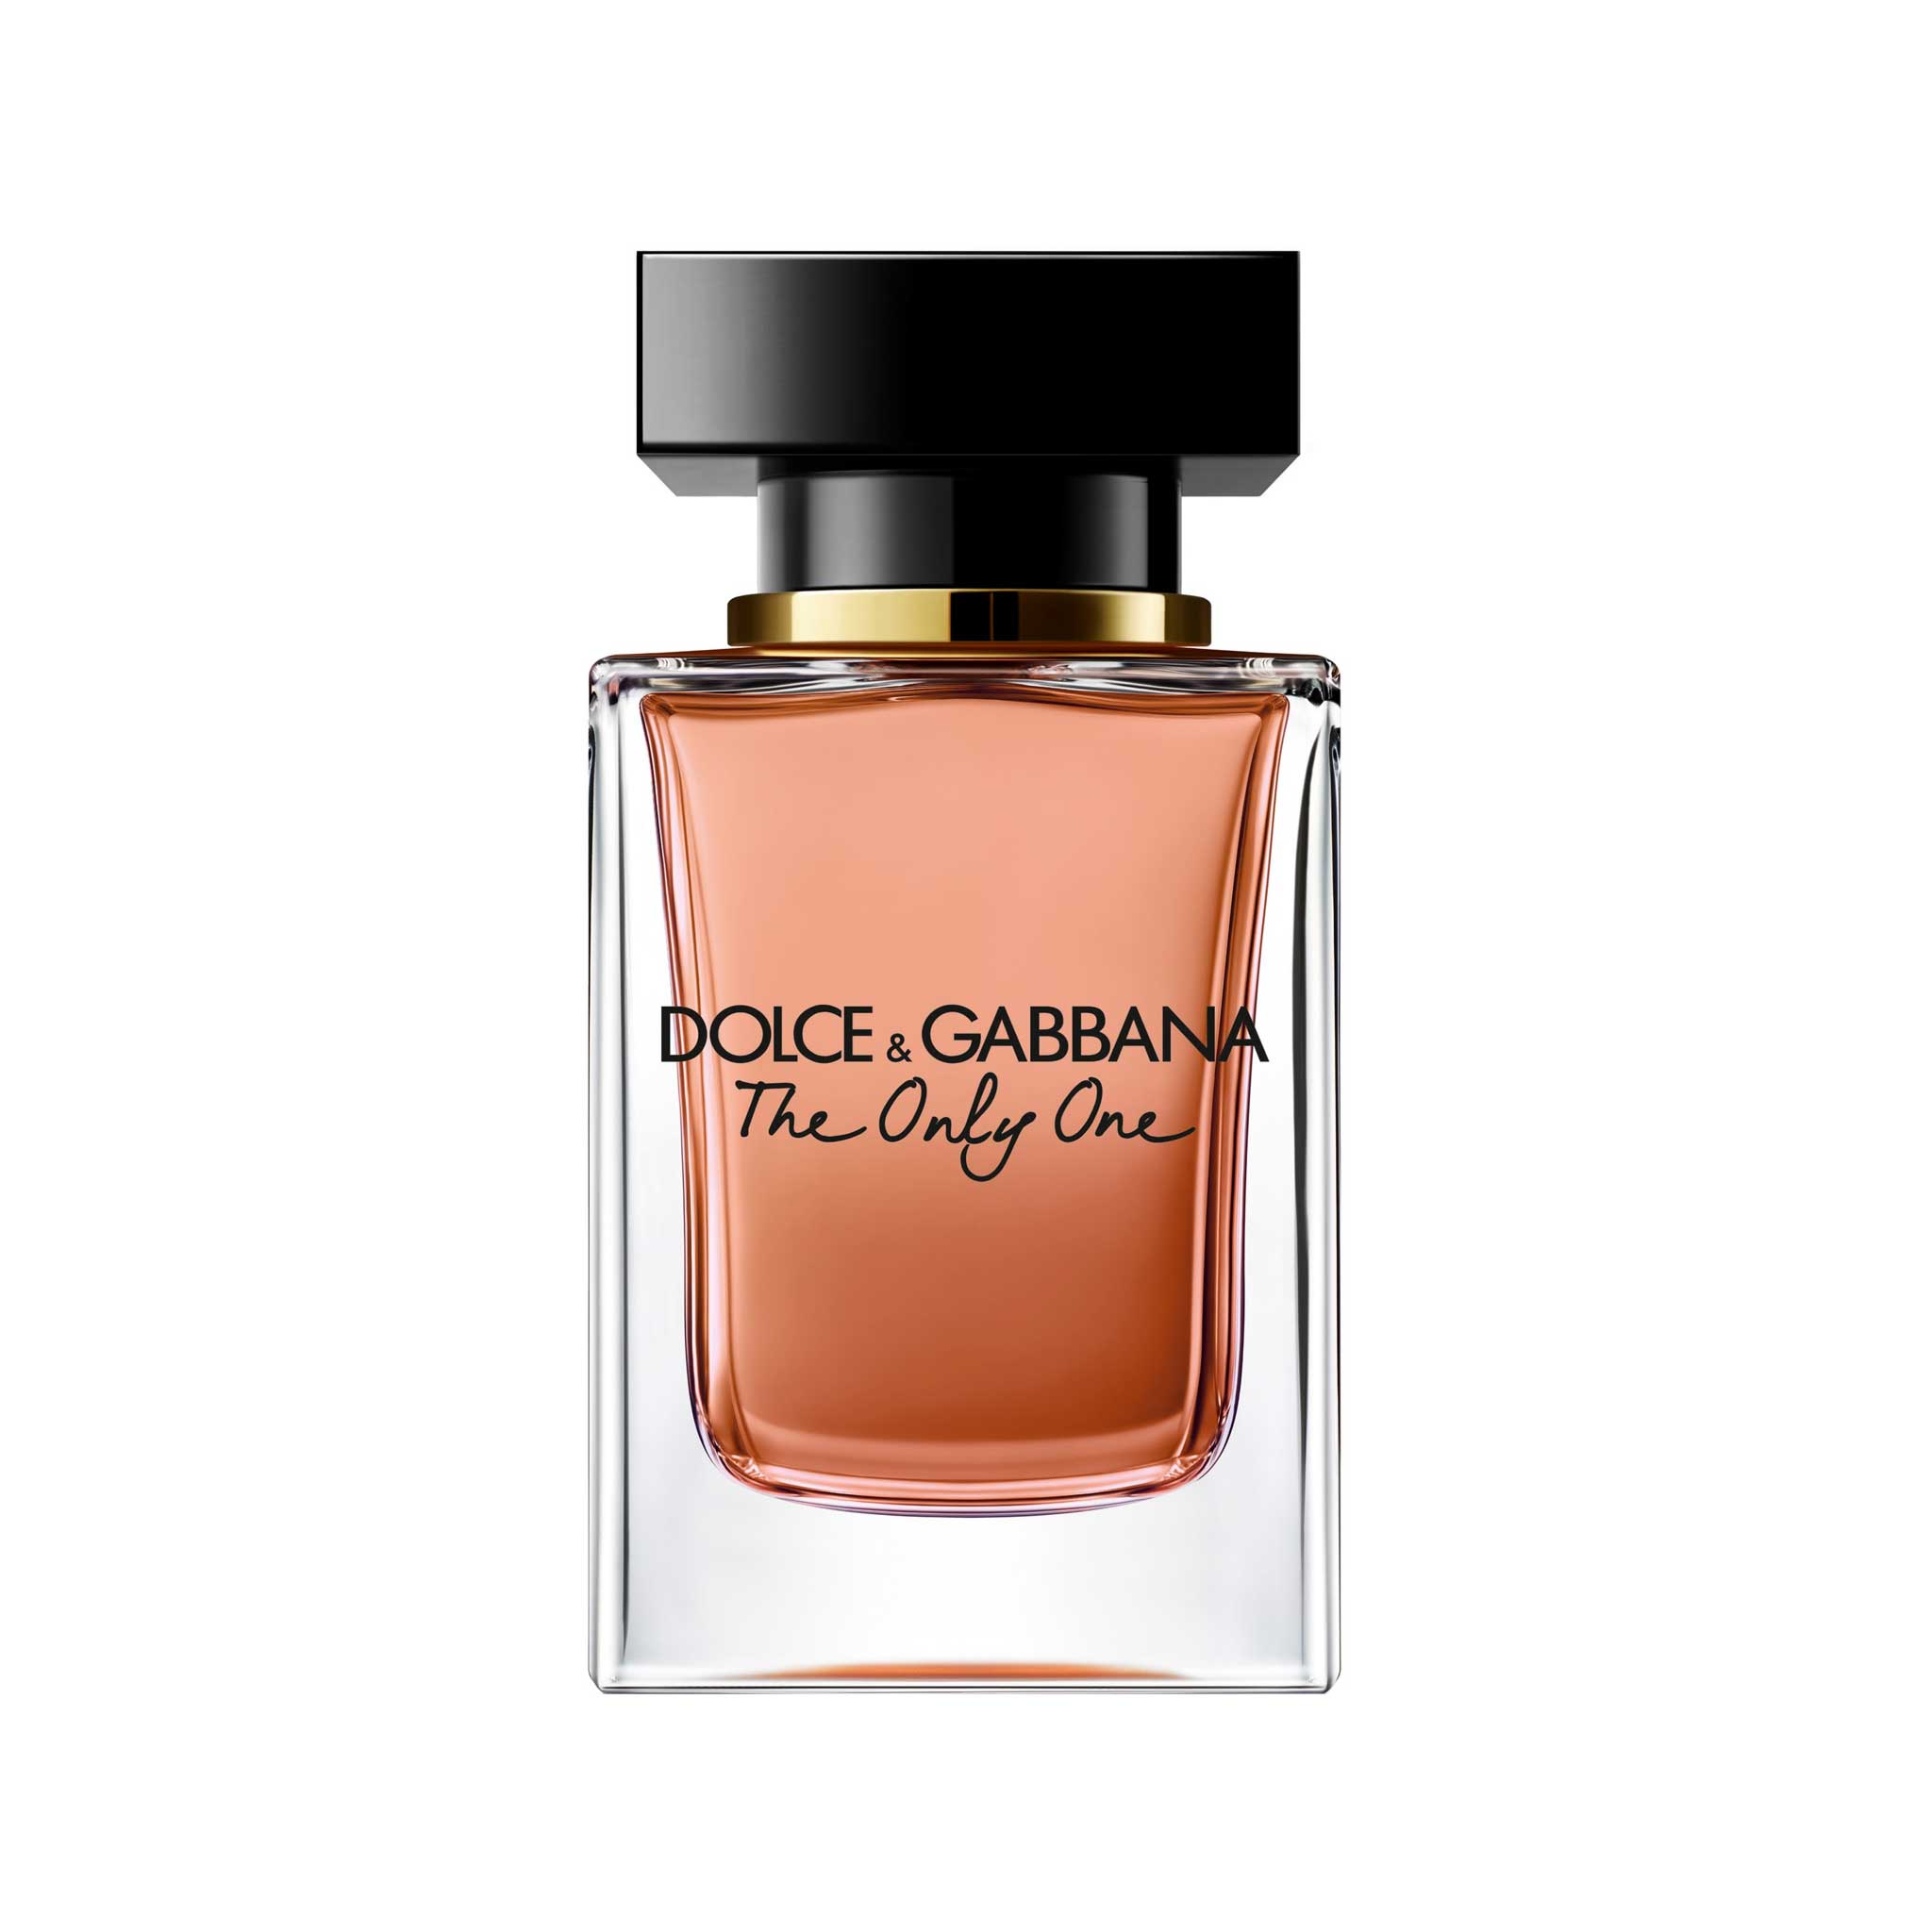 Dolce & Gabbana The Only One for Women Eau de parfum 100ml